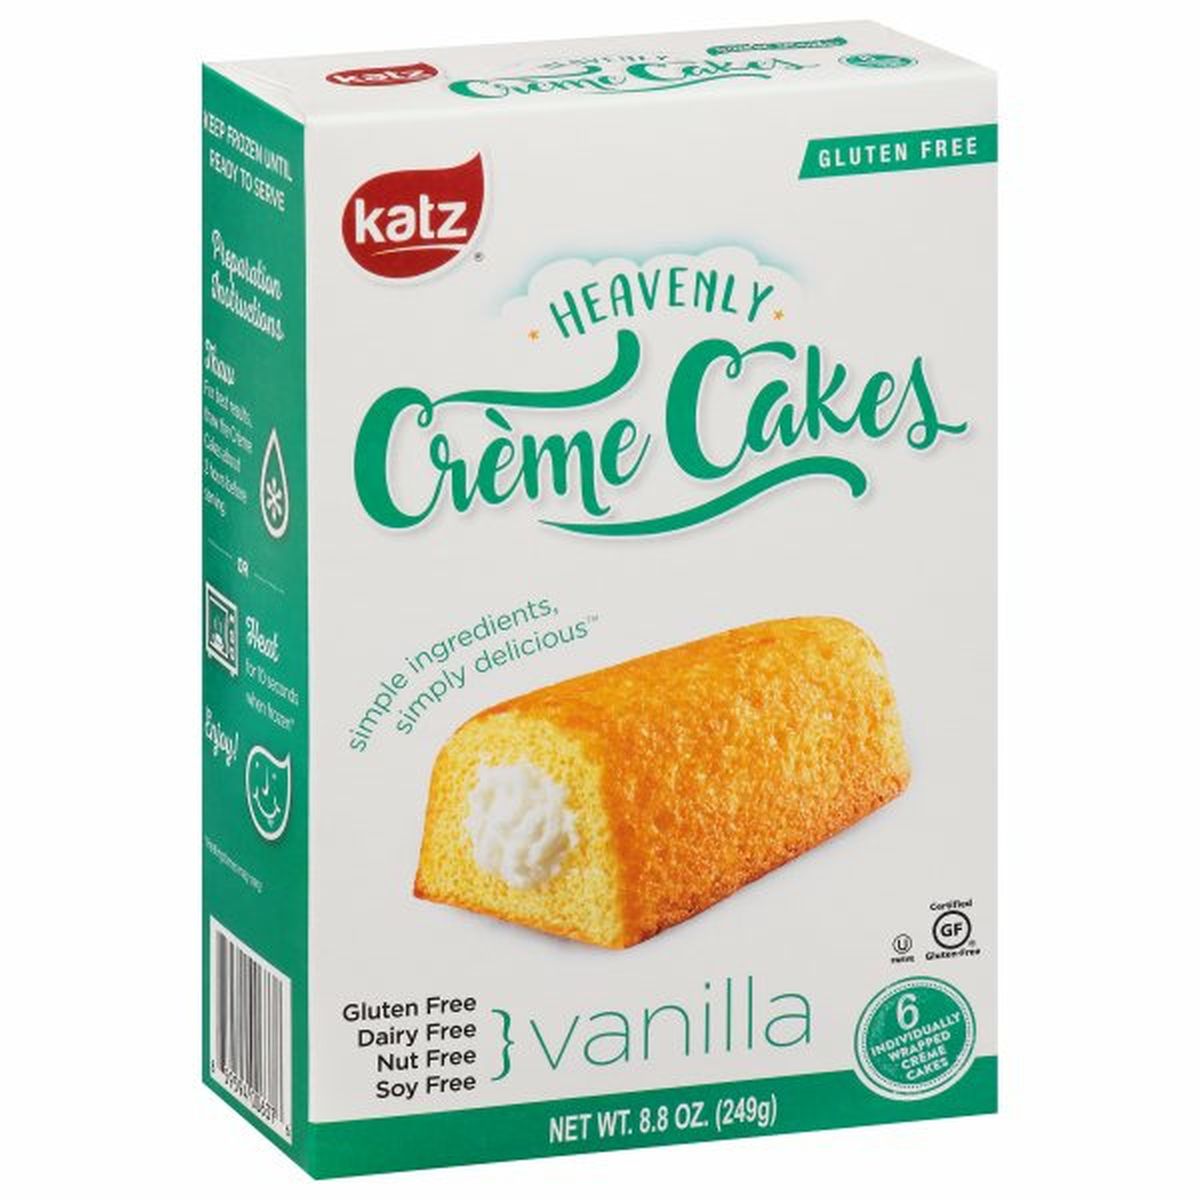 Calories in Katz Creme Cakes, Gluten Free, Vanilla, Heavenly